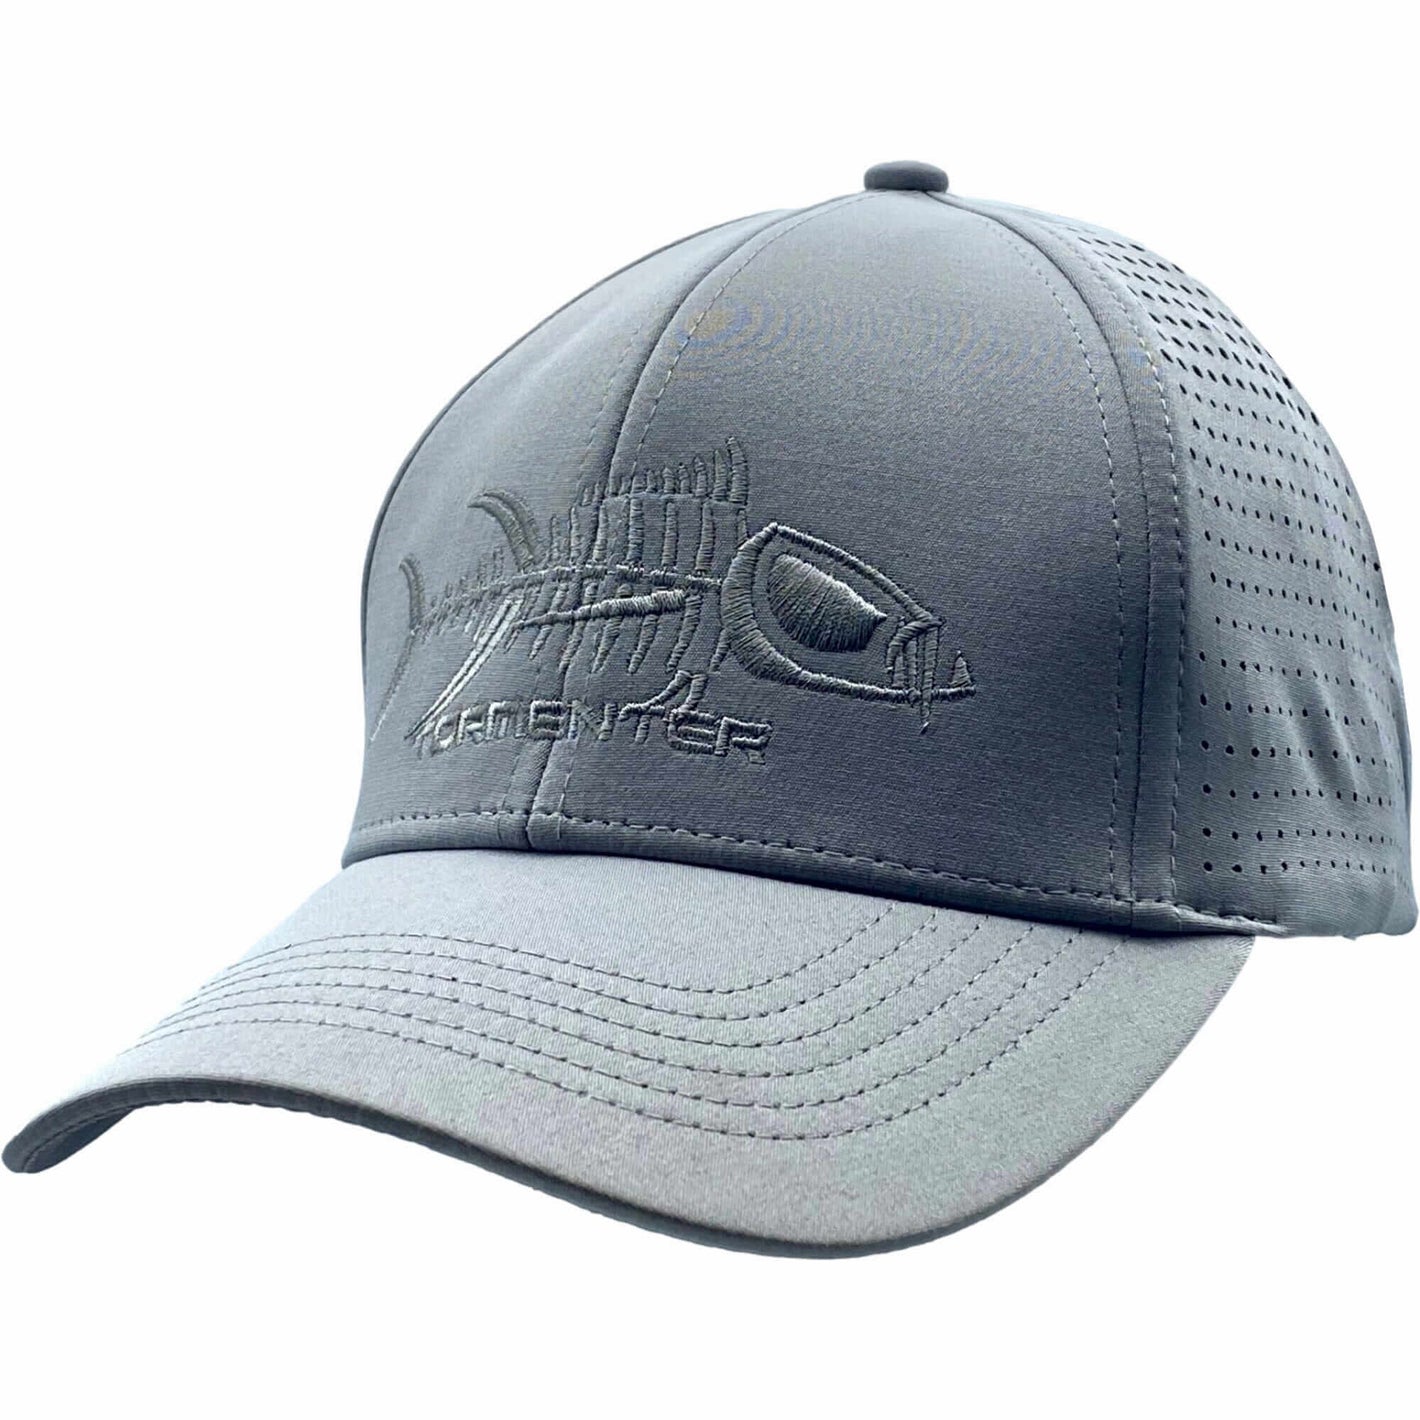 Performance Hat - Gray Head Gear Tormenter Ocean 